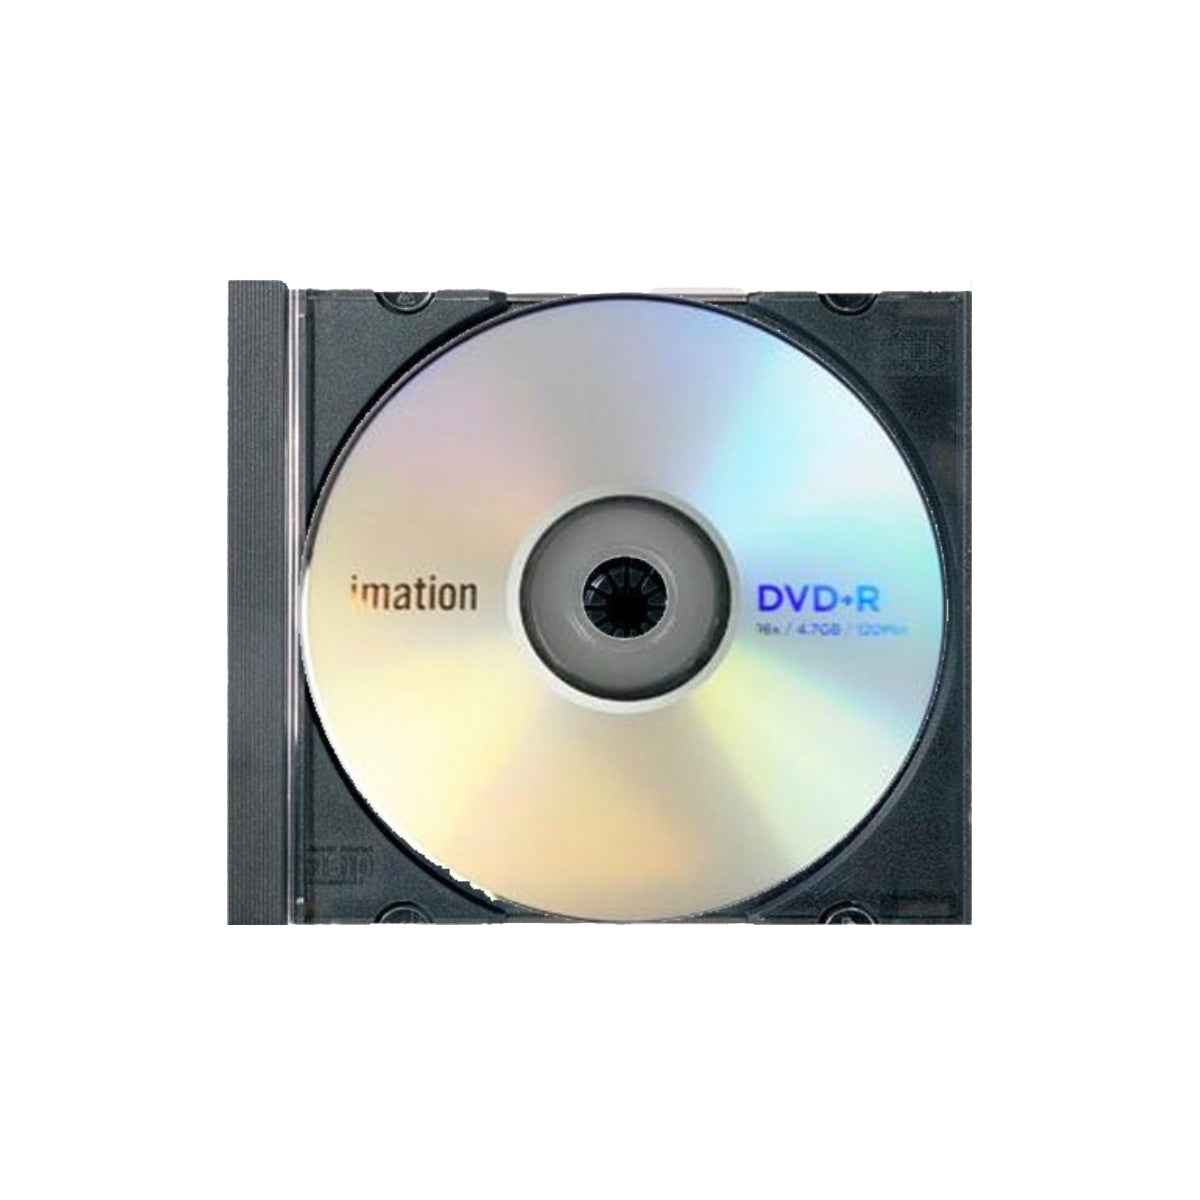 Imation DVD+R 120min, 4.7GB, 16x, in jewel case